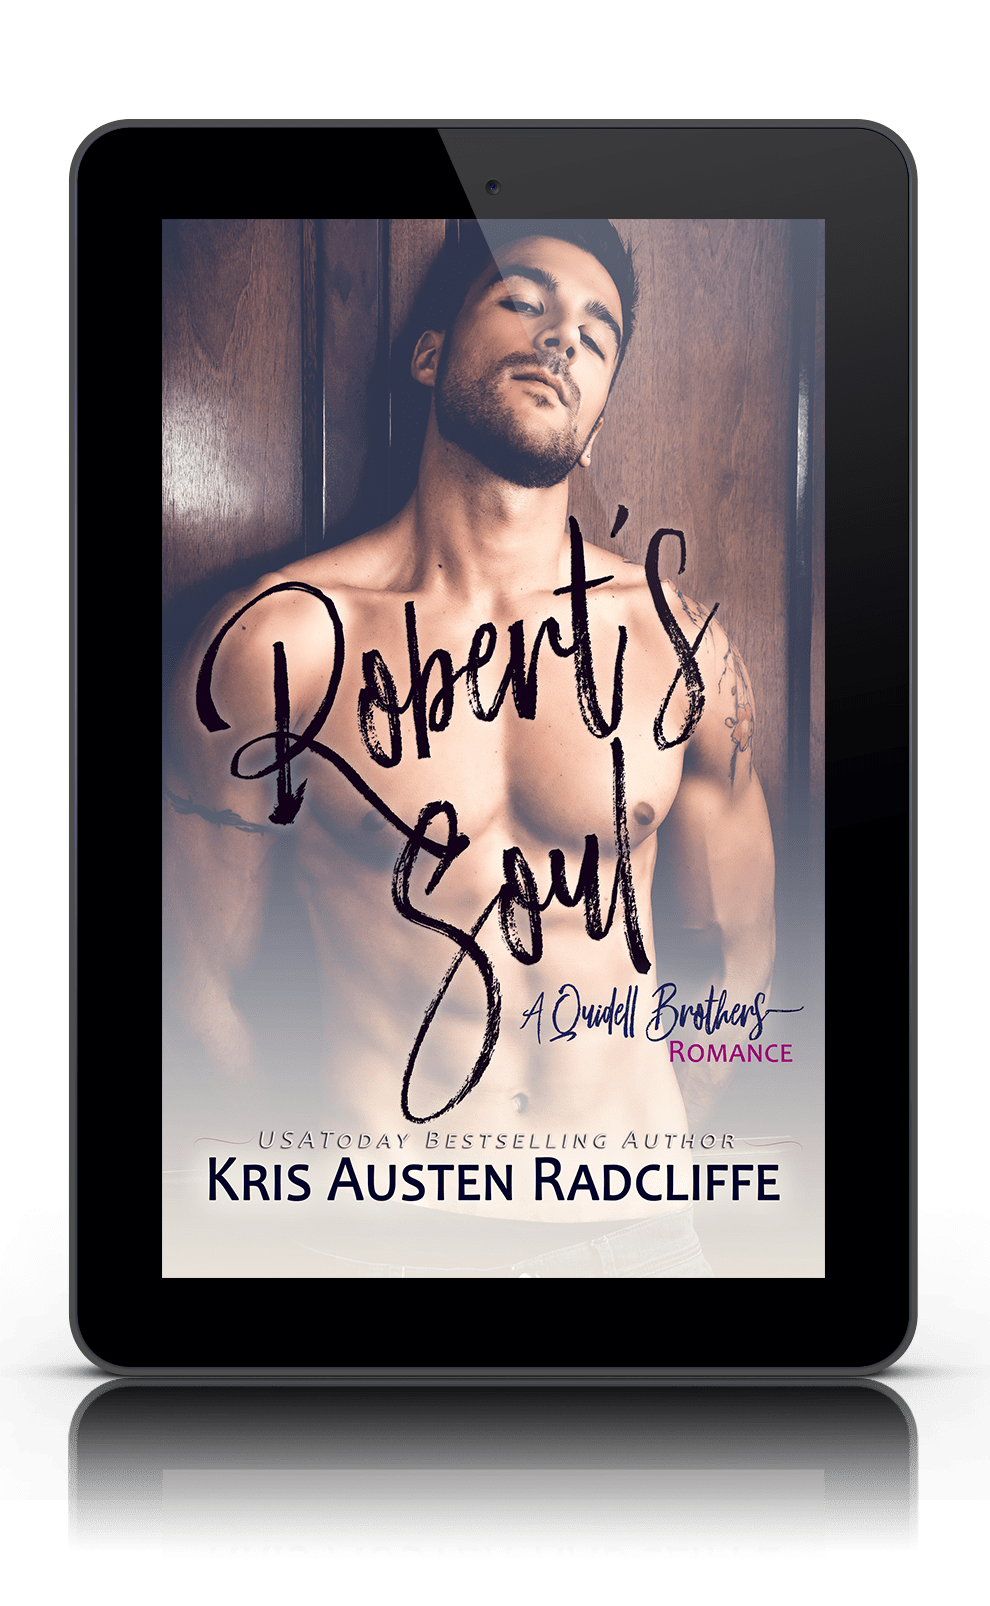 Robert's Soul by Kris Austen Radcliffe